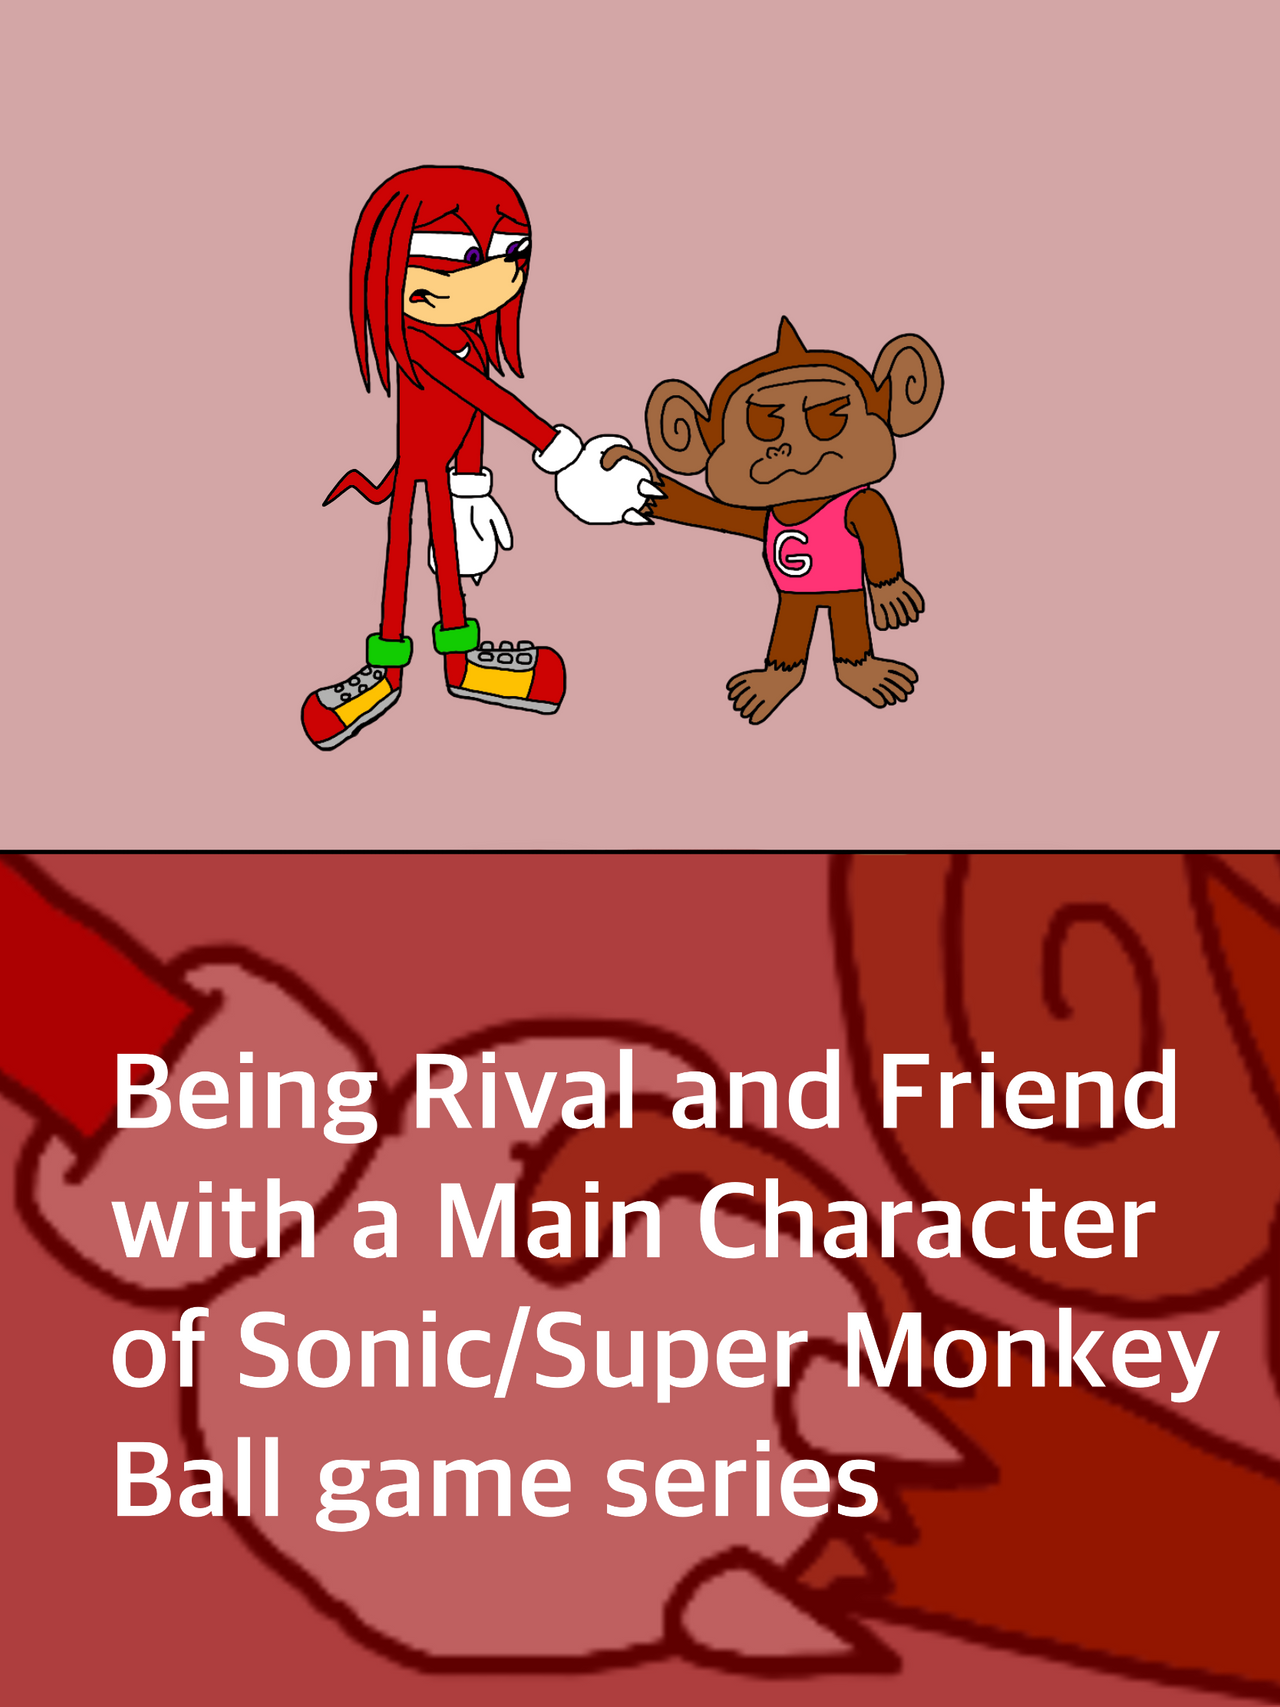 Super Monkey Ball Meme: Face Swap by gameandshowlover on DeviantArt